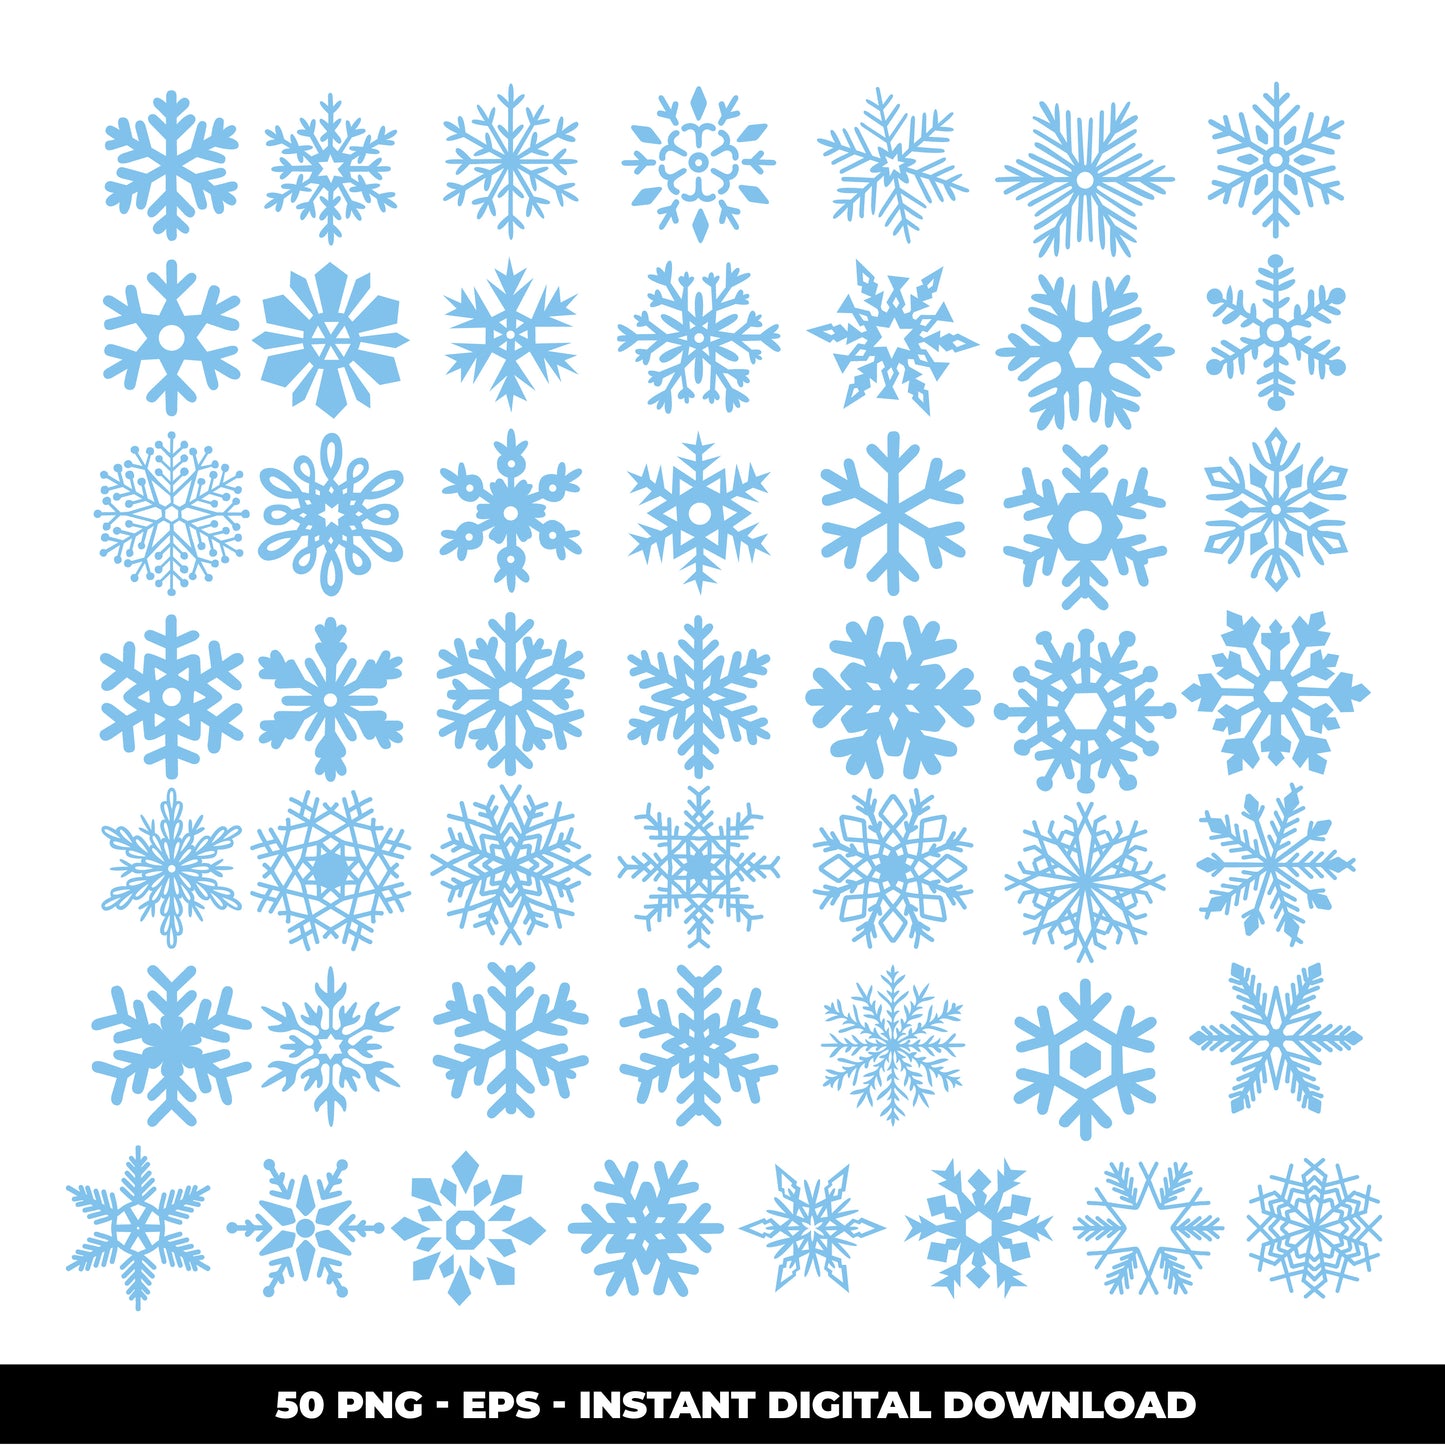 COD842- Snowflake clipart, winter snowflake eps,  Merry Christmas clipart, winter clipart